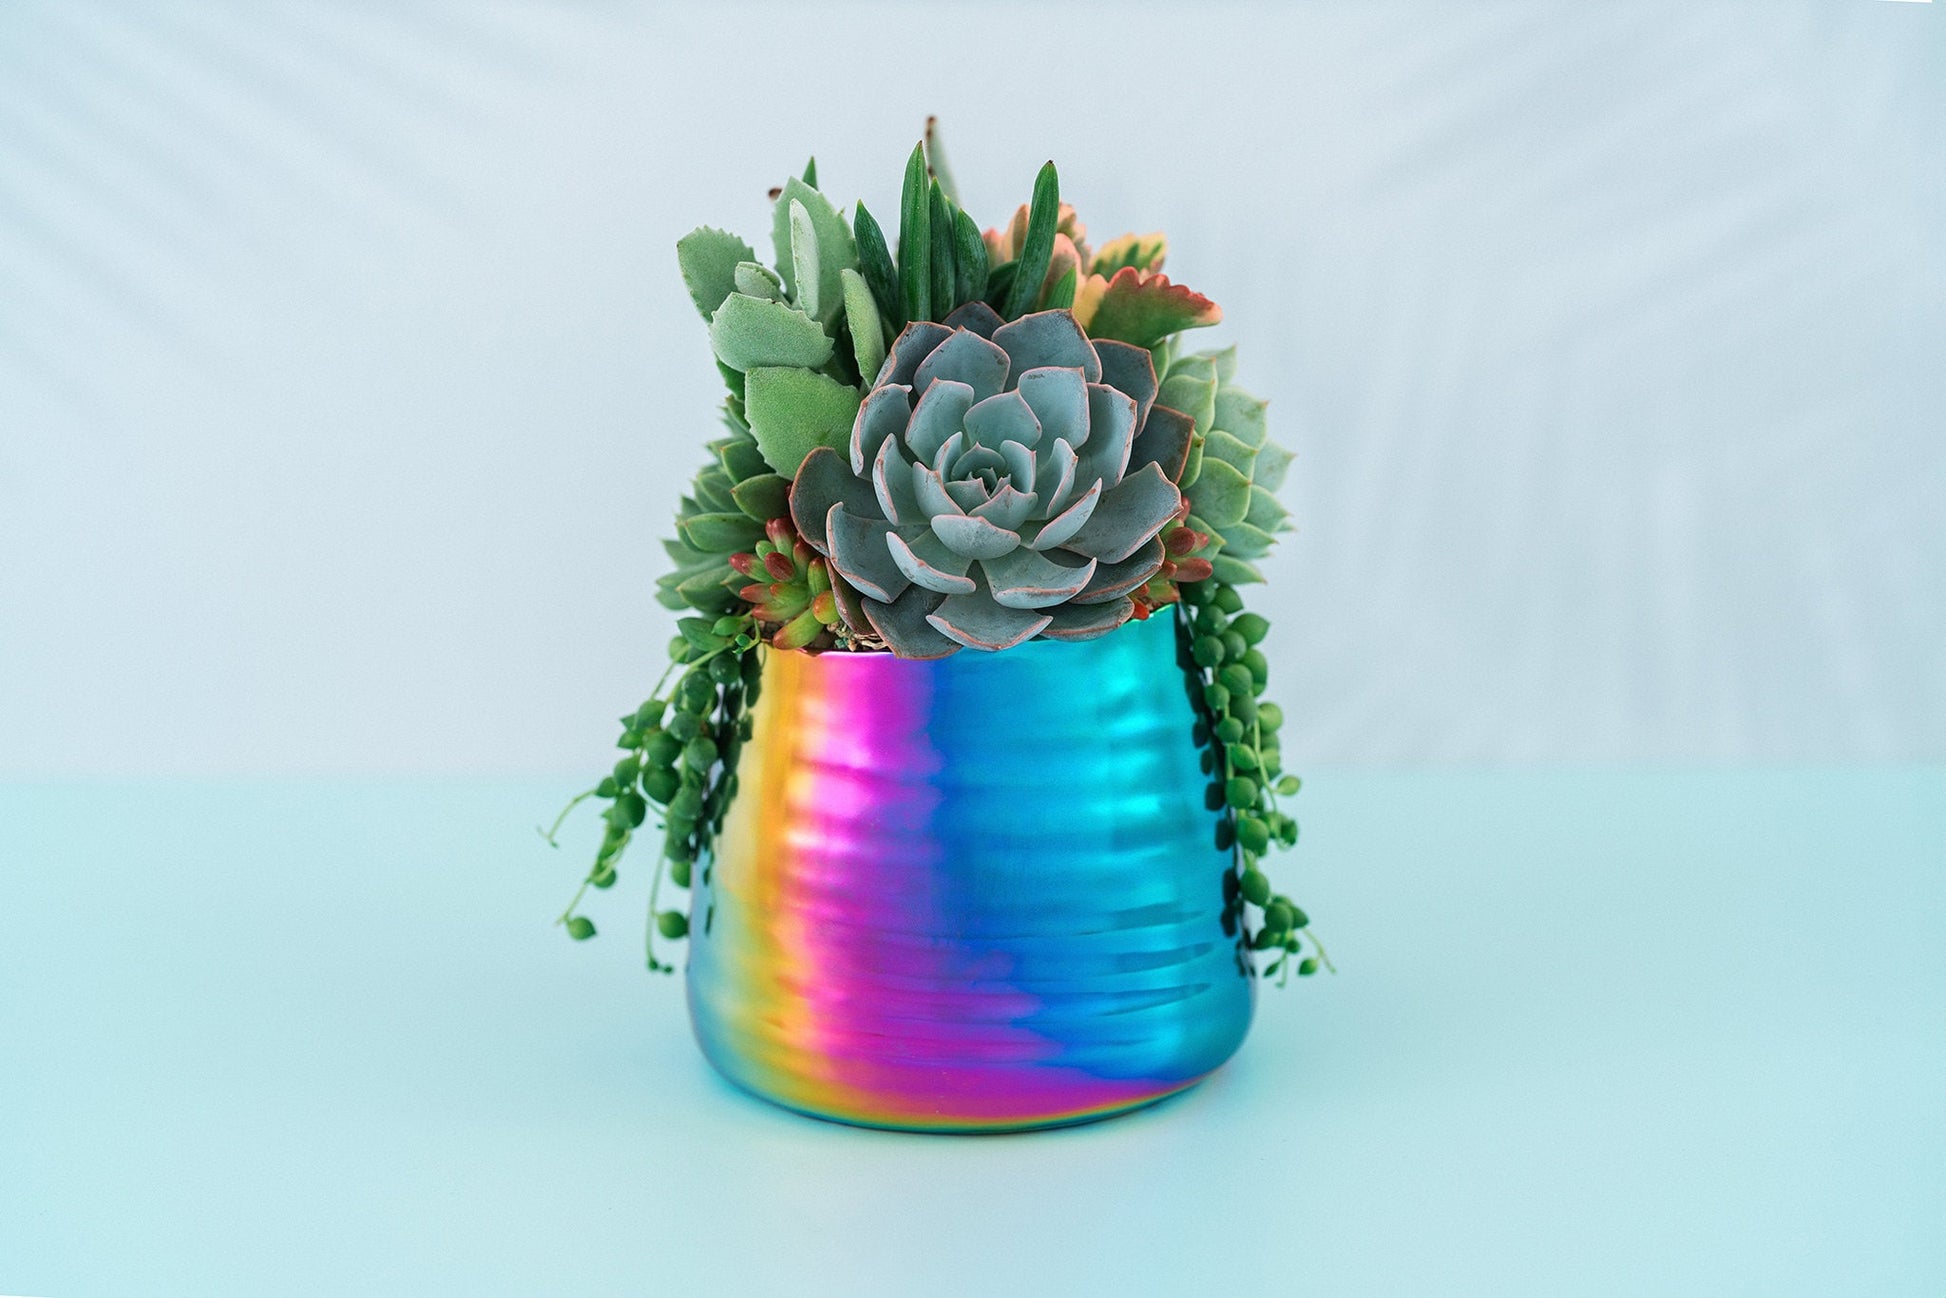 Iridescent Rainbow Succulent Arrangement Planter: Modern and Colorful Living Succulent Gift or Centerpiece